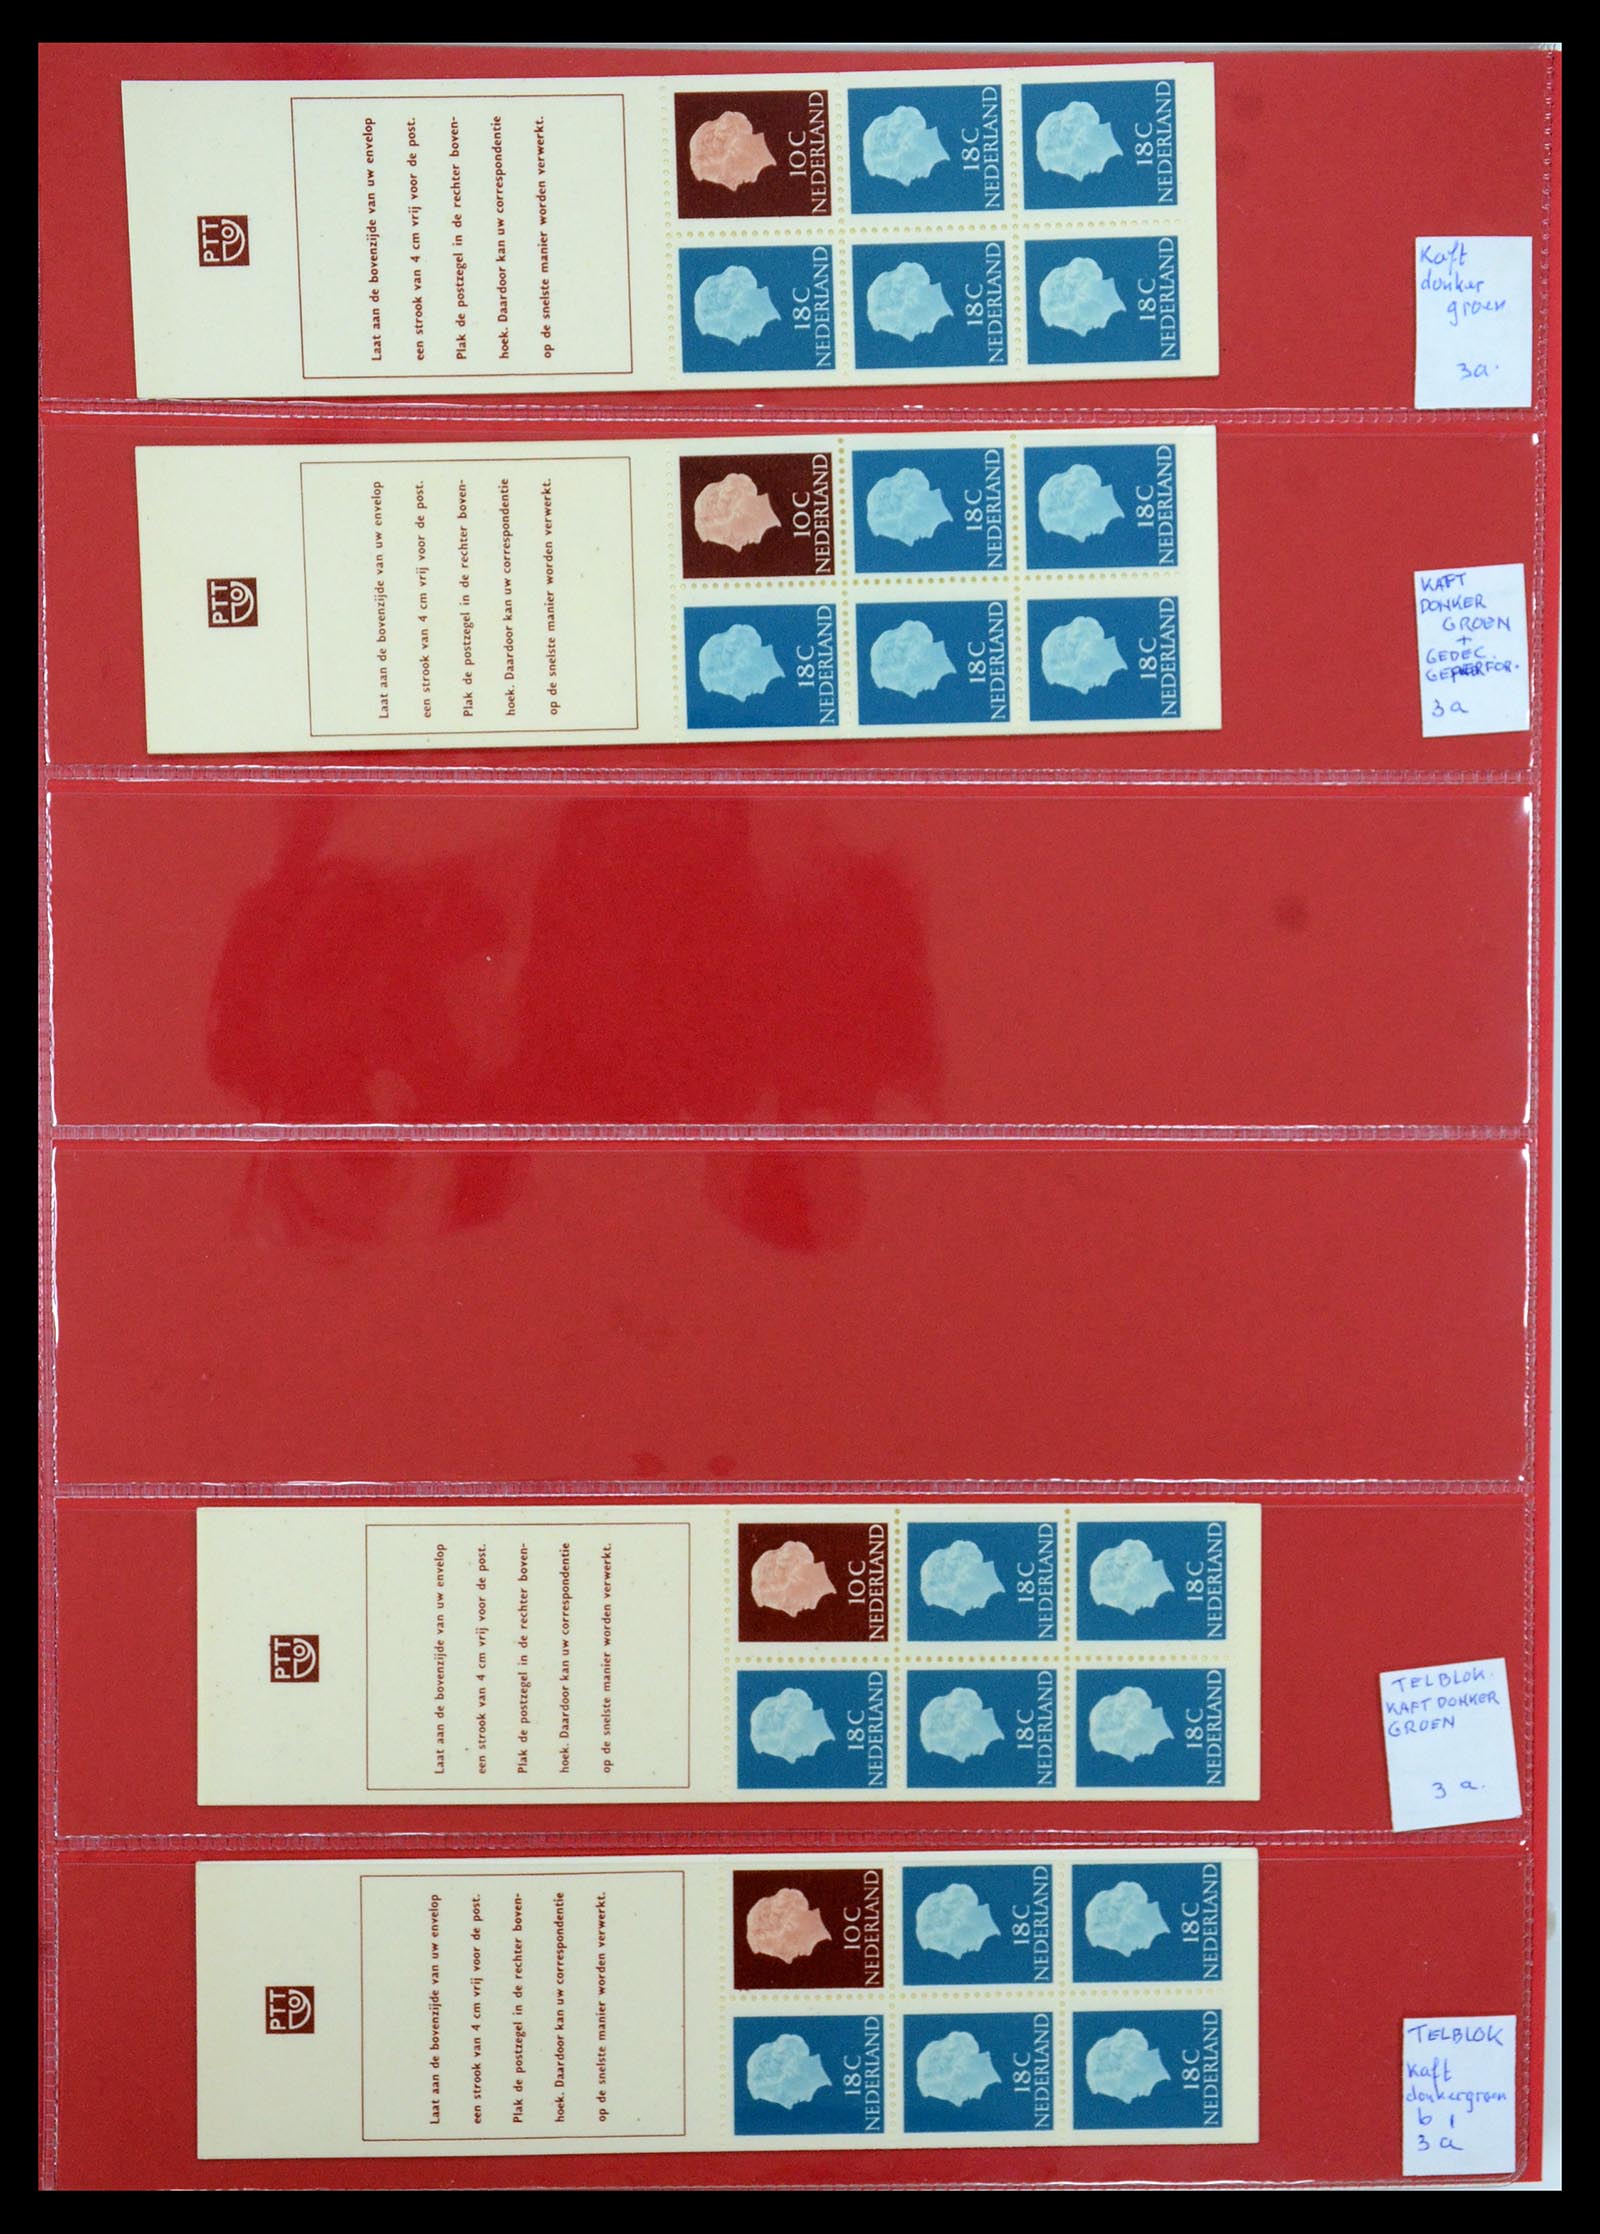 35705 025 - Stamp Collection 35705 Netherlands stamp booklets 1964-2000.